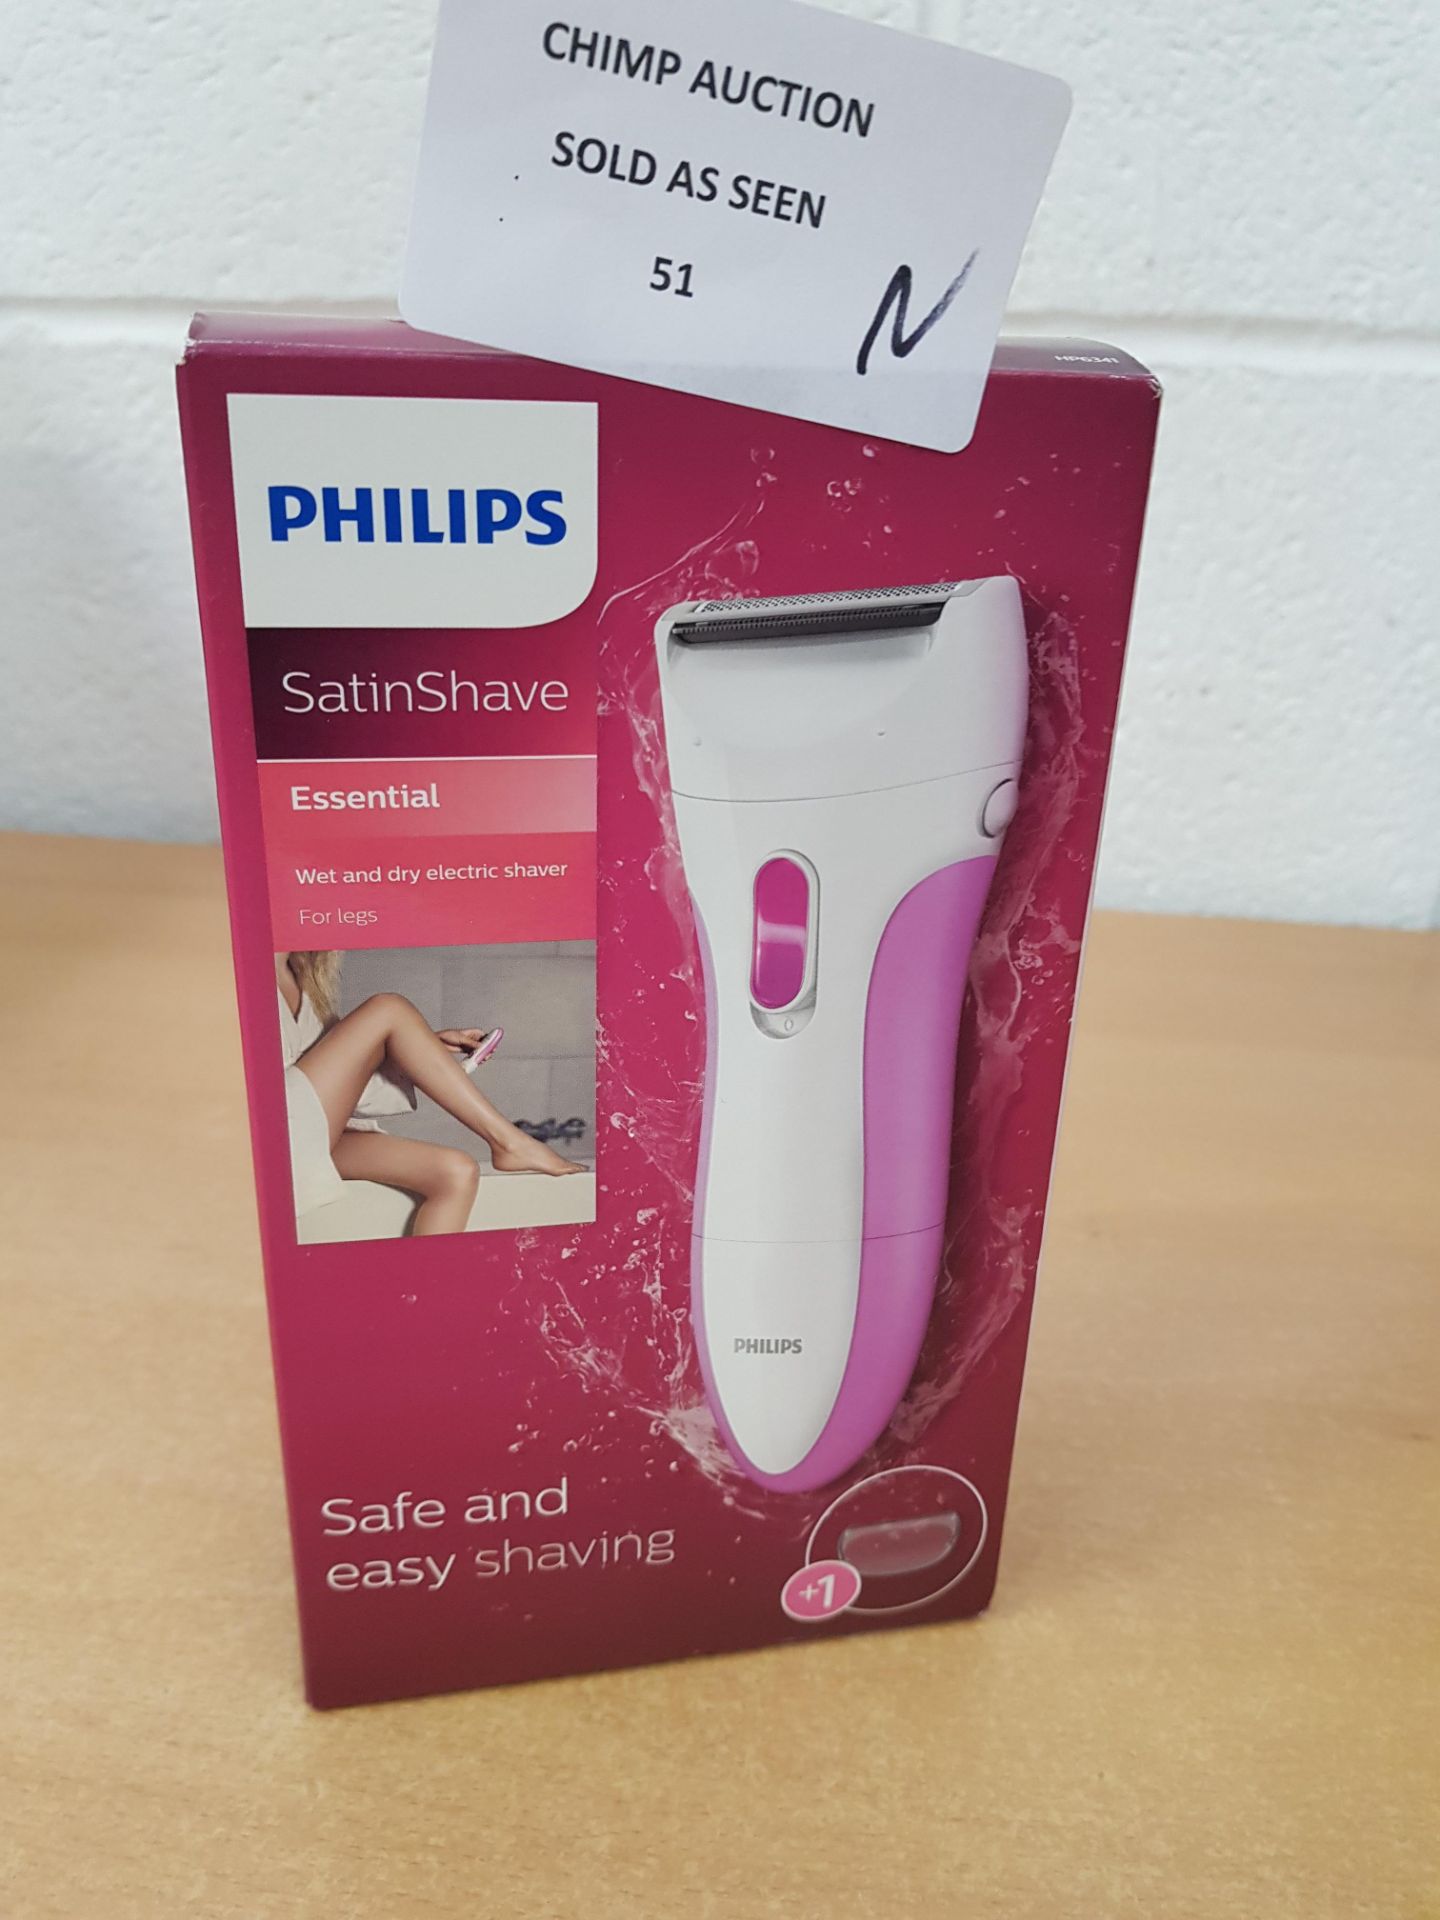 Brand new Philips HP6341 Ladyshave SatinShave Essential SHAVER